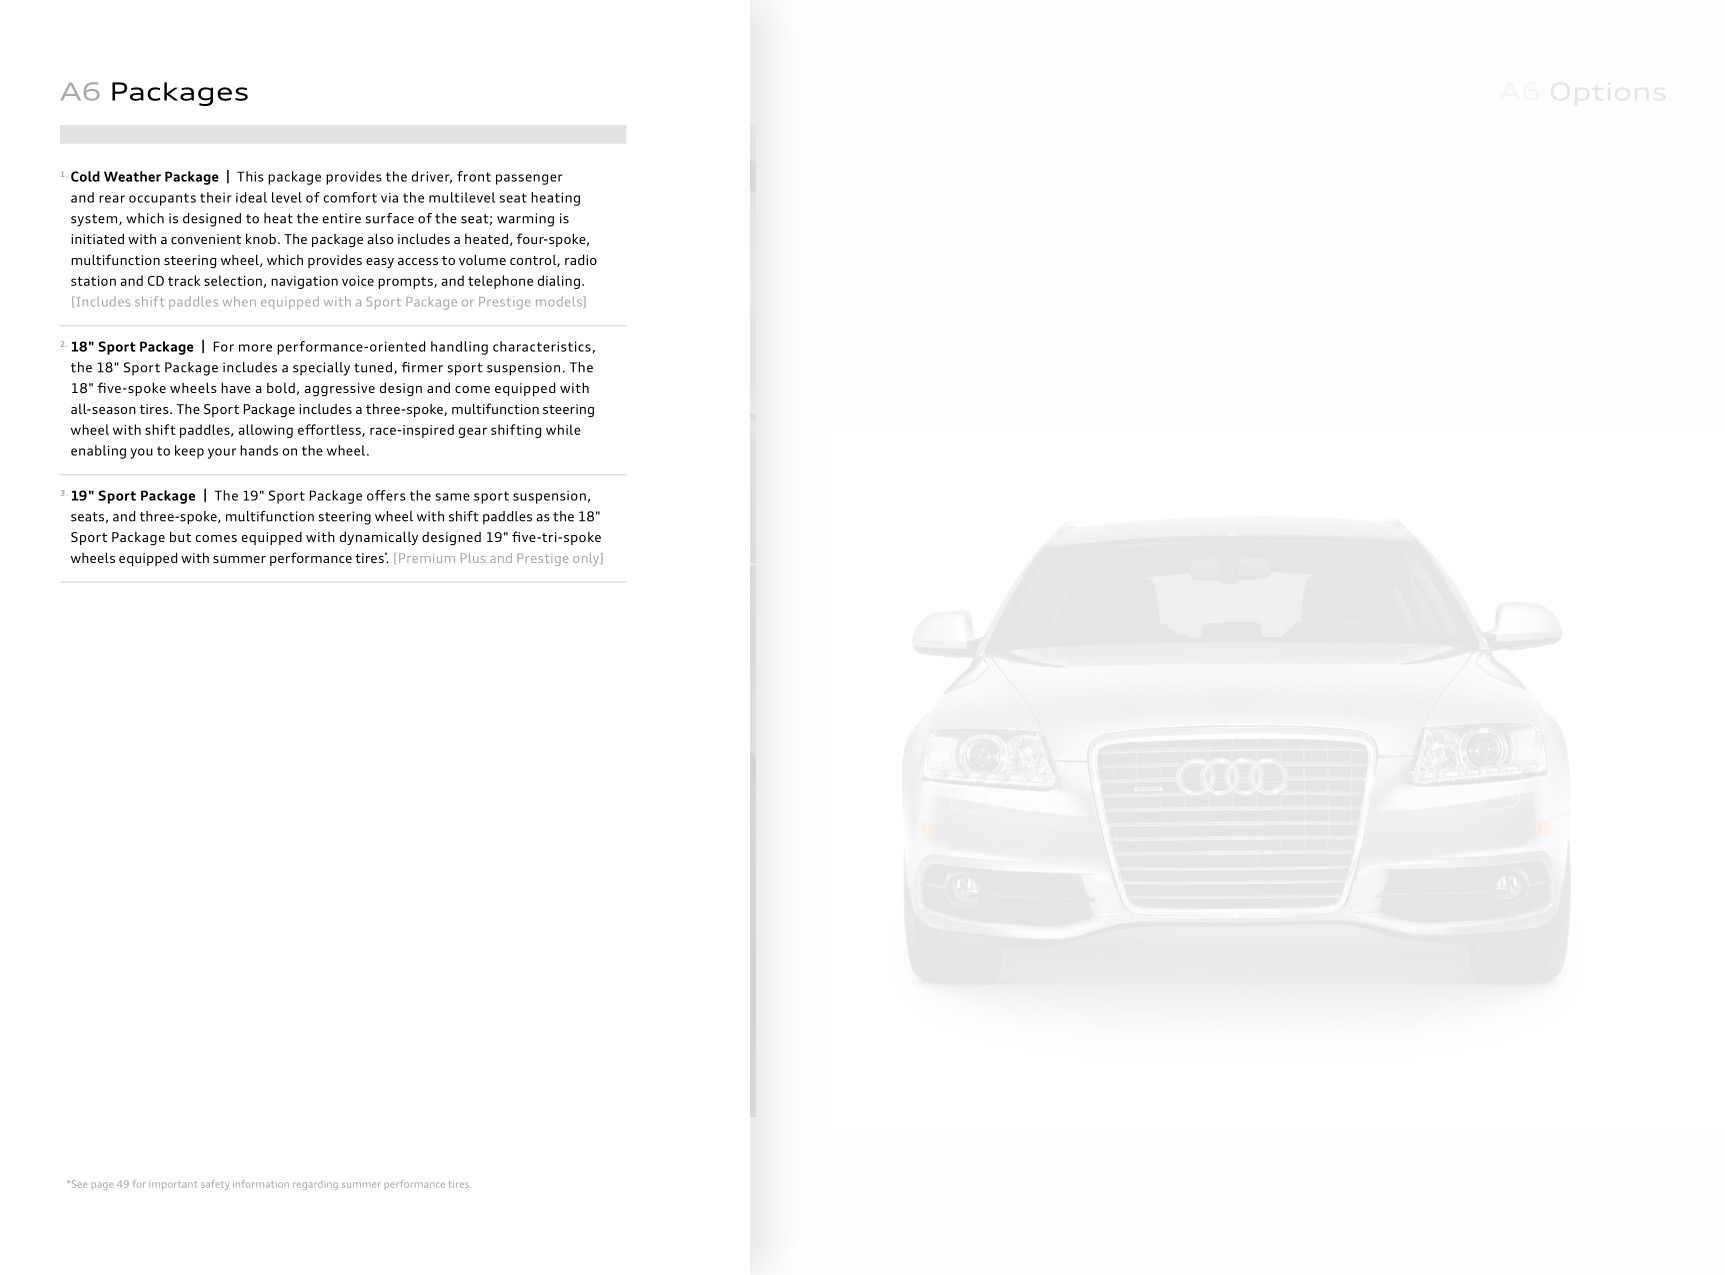 2011 Audi A6 Brochure Page 22